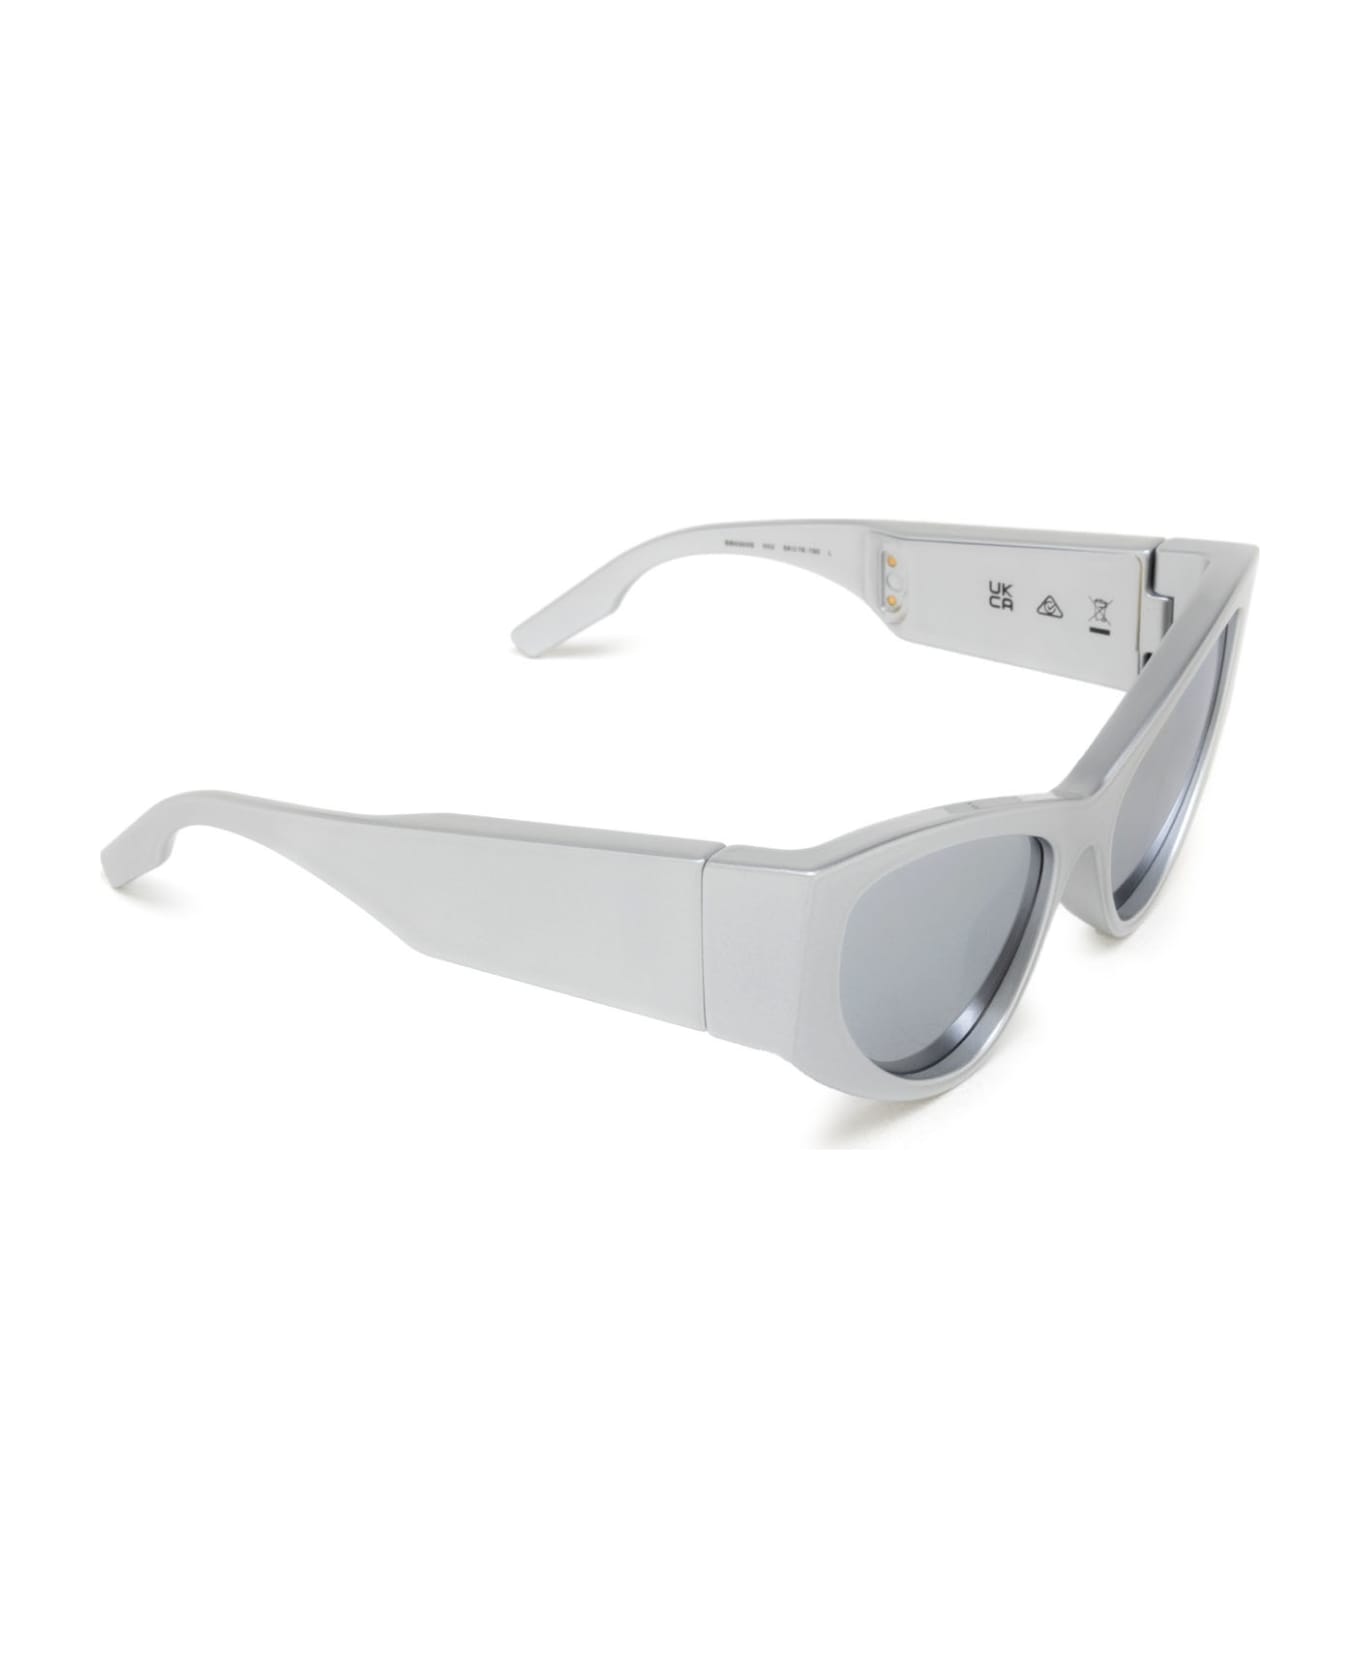 Balenciaga Eyewear Bb0300s Sunglasses - Silver